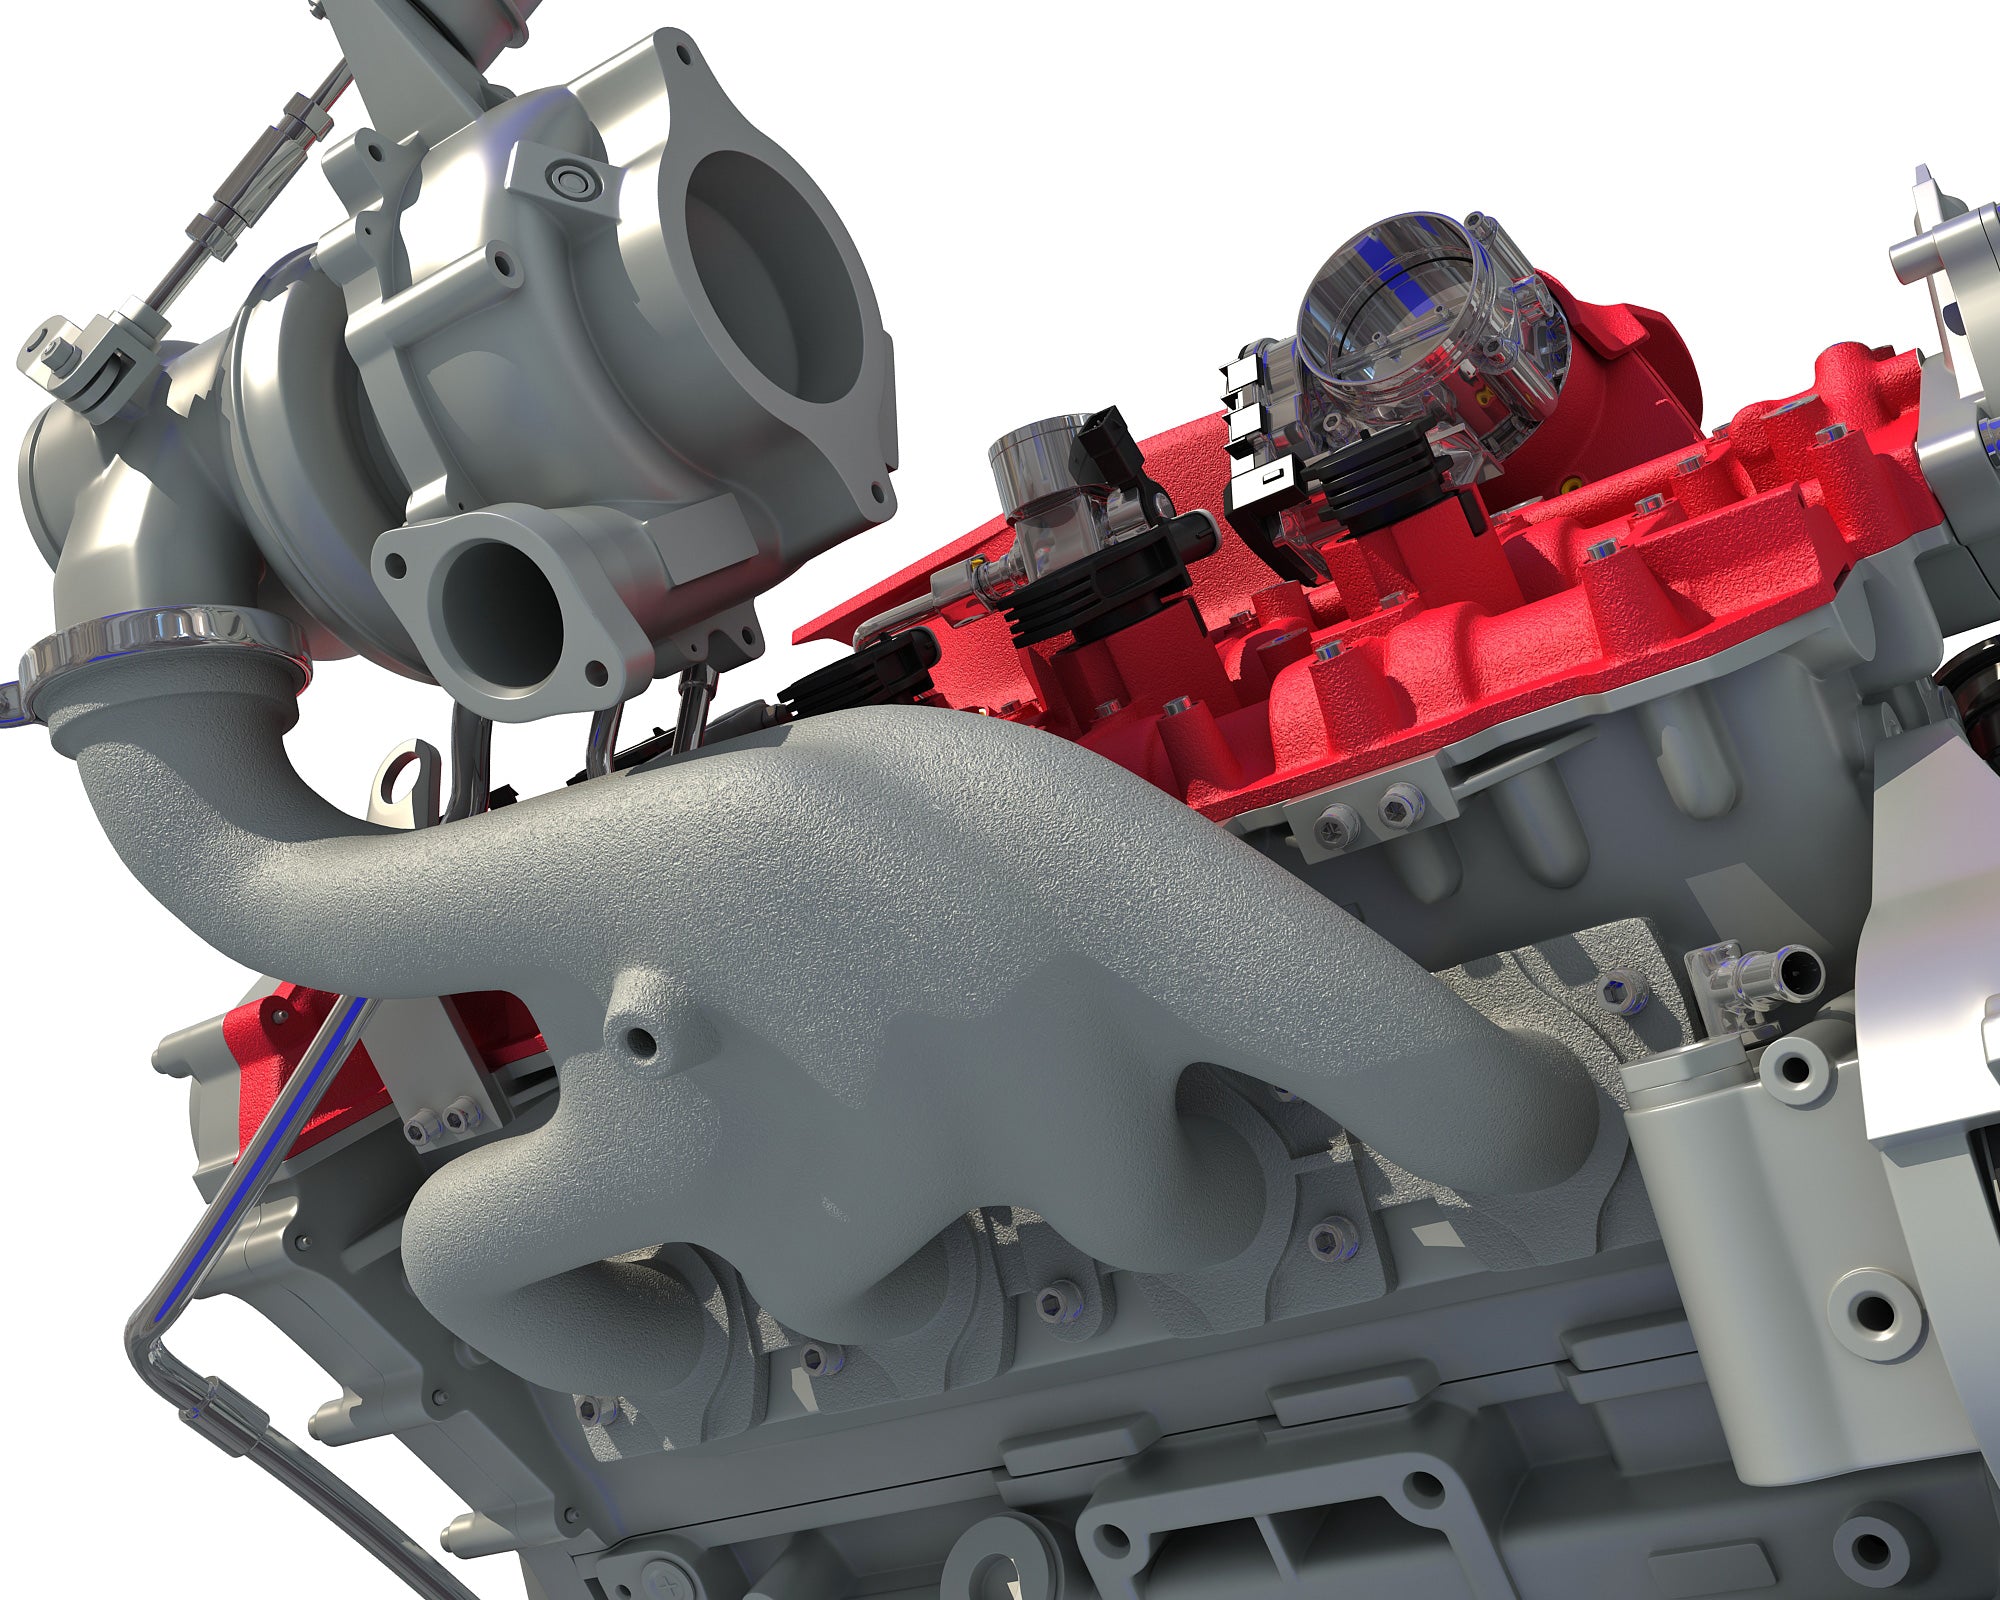 Turbocharged Engine 3D Model